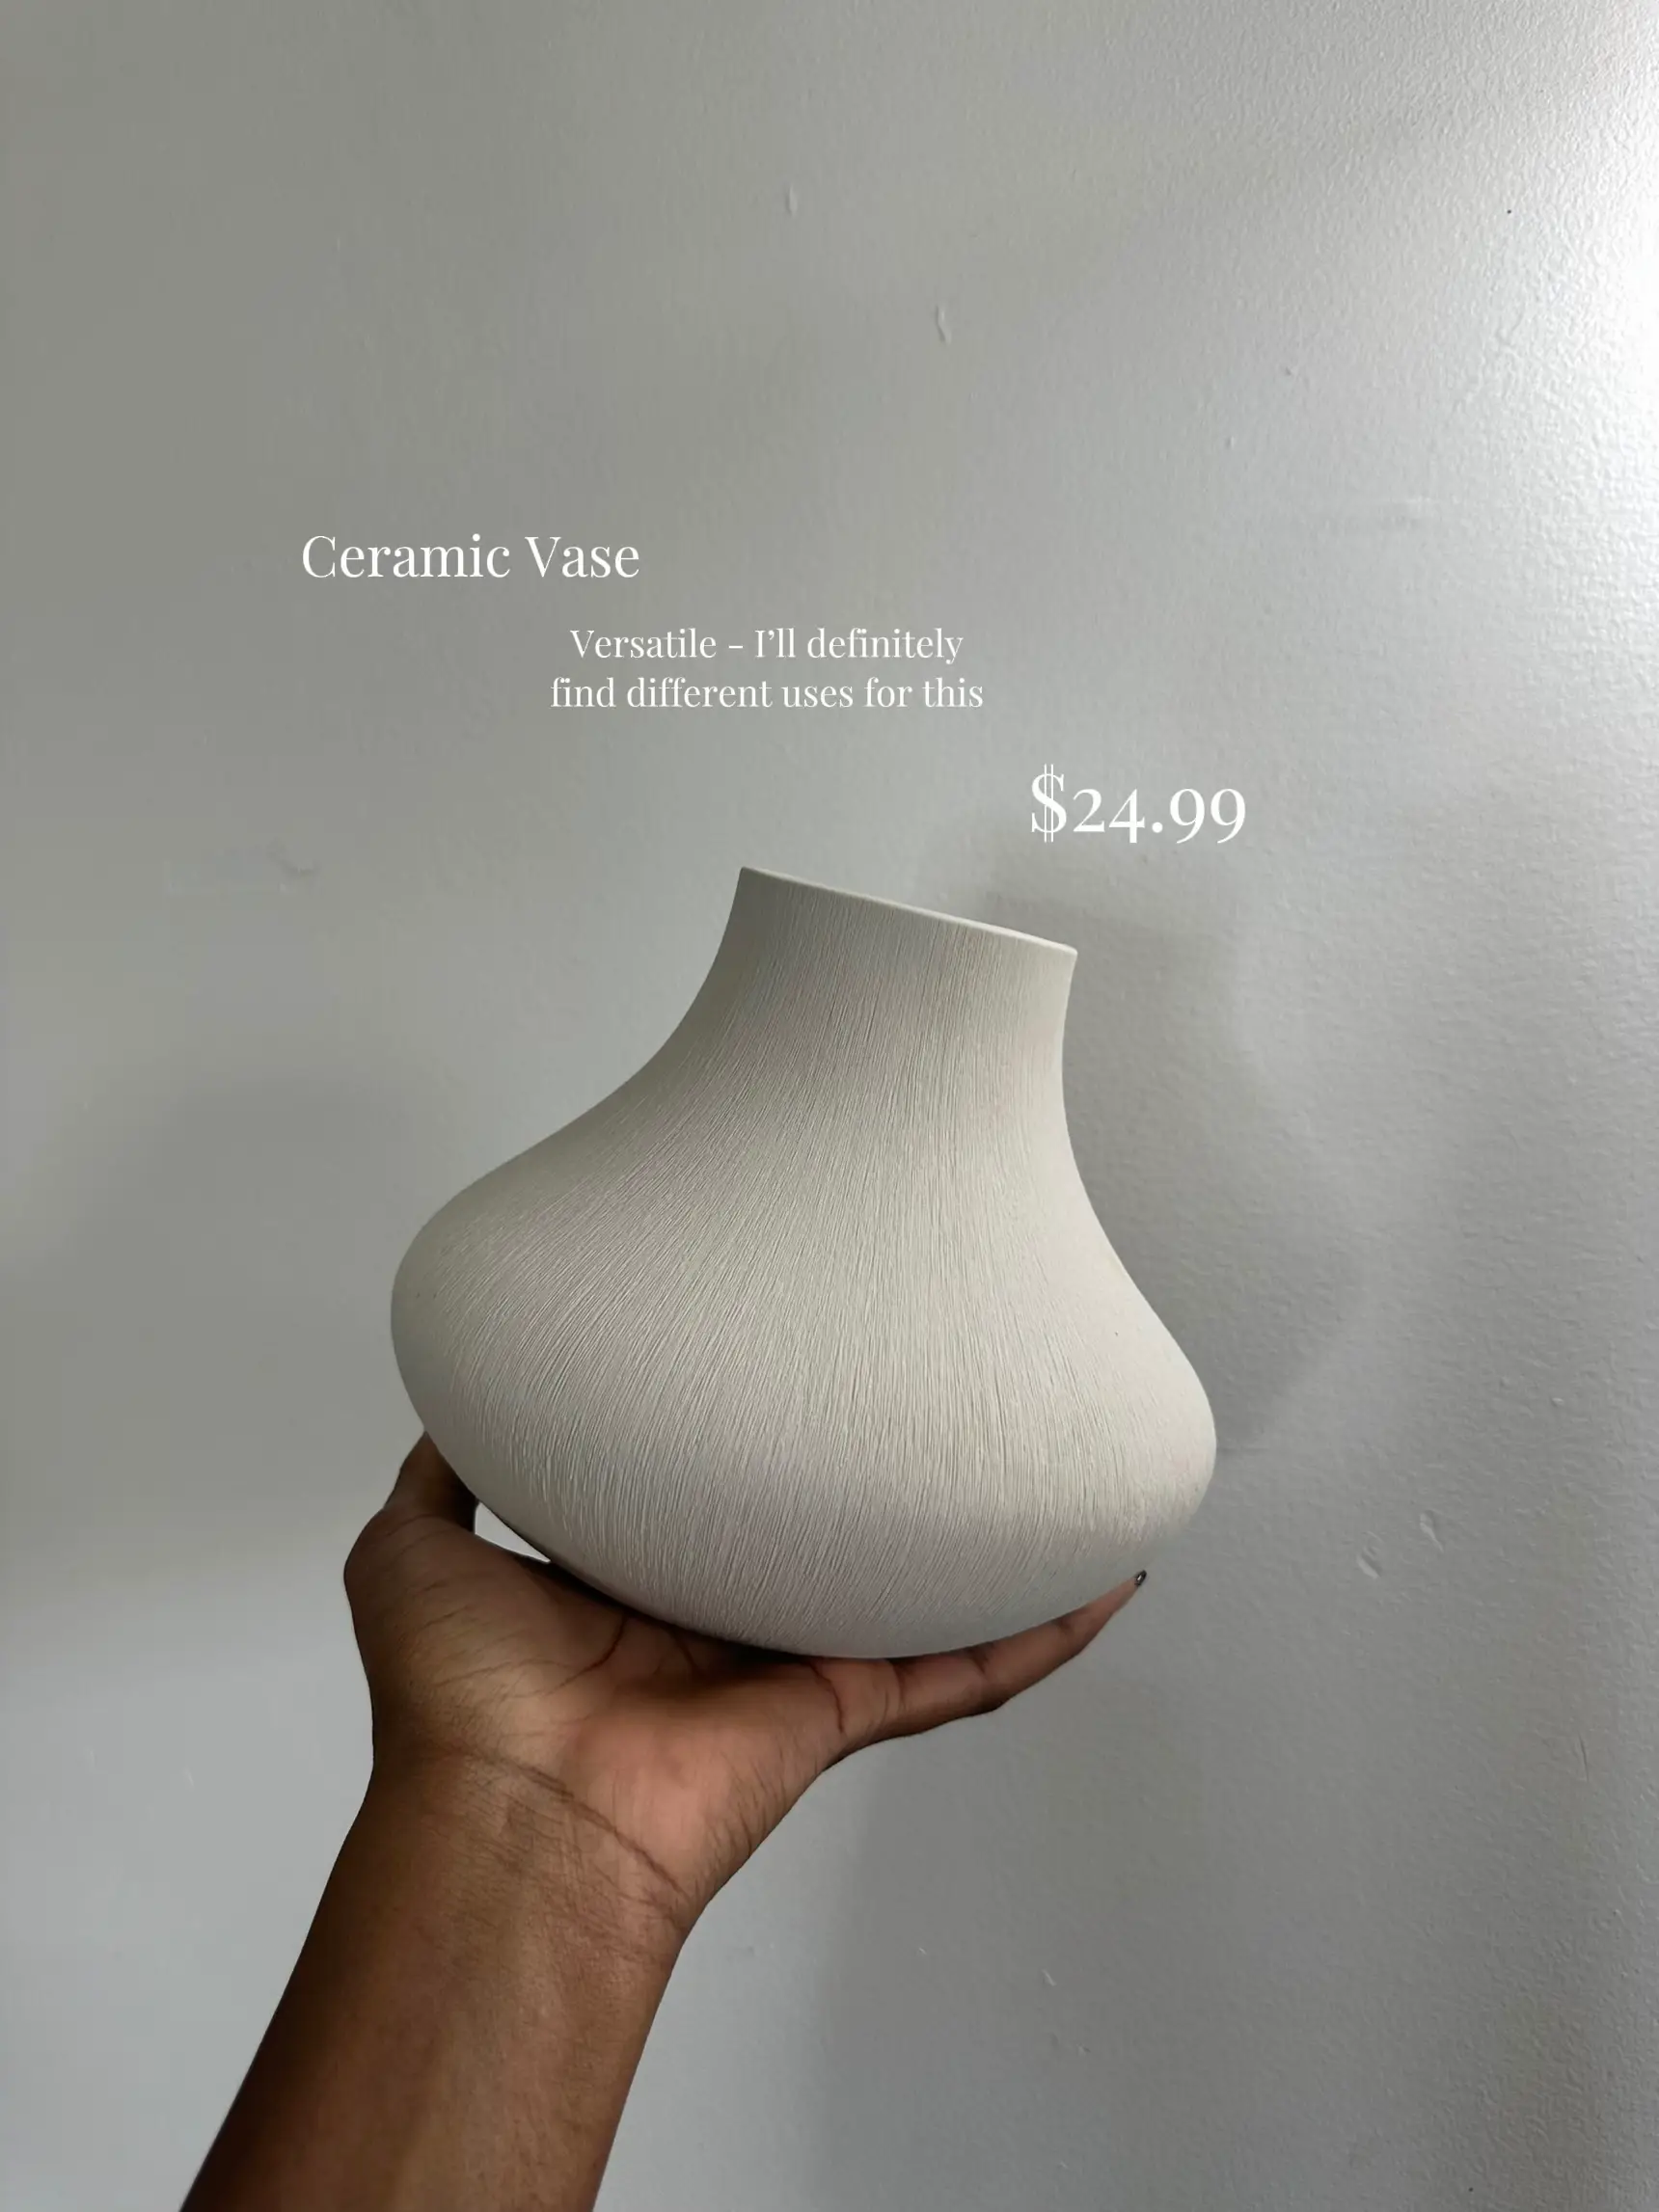  A hand holding a white ceramic vase.